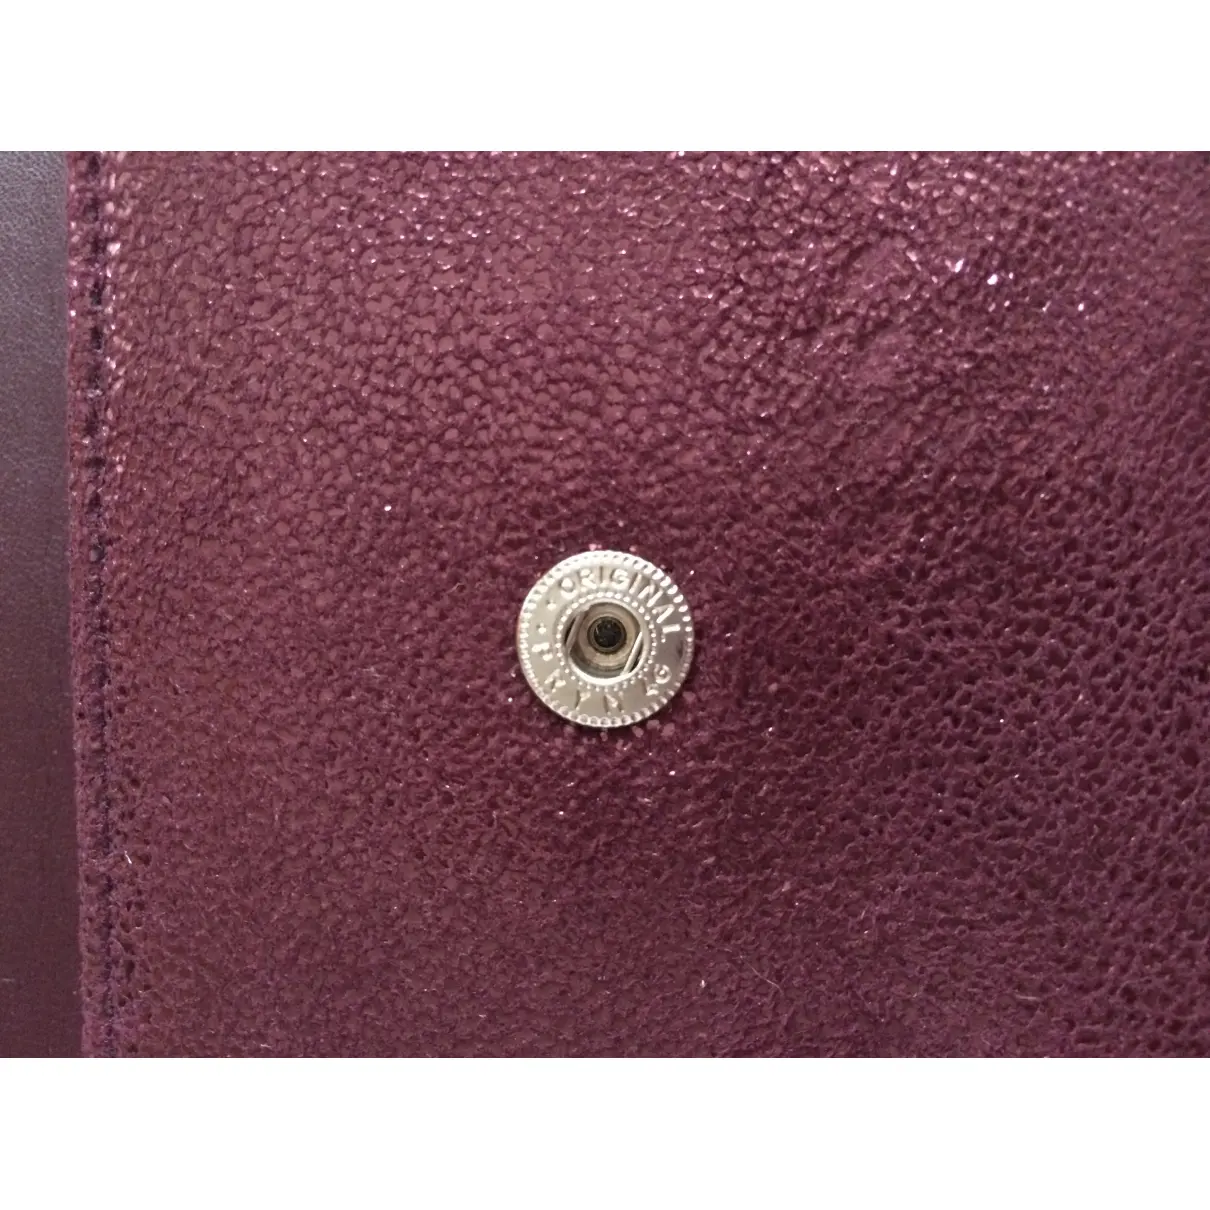 Vegan leather wallet Stella McCartney